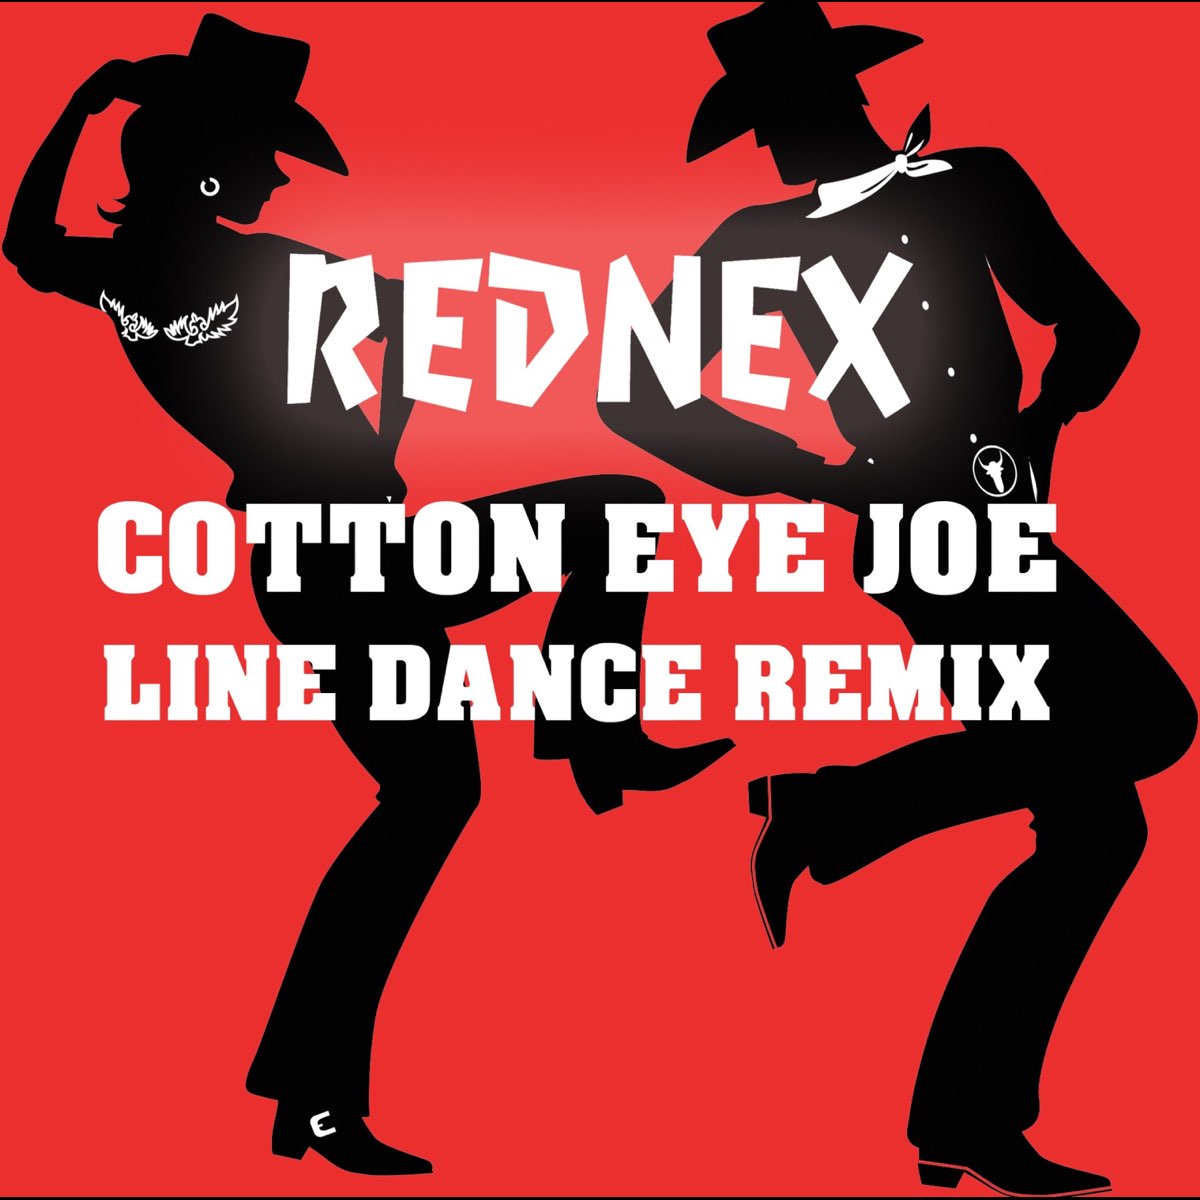 Cotton eye joe перевод на русский. Rednex Cotton Eye Joe. Rednex Cotton Eye Joe Remix. Rednex - Cotton Eye Joe обложка. Cotton Eye Joe line Dance.